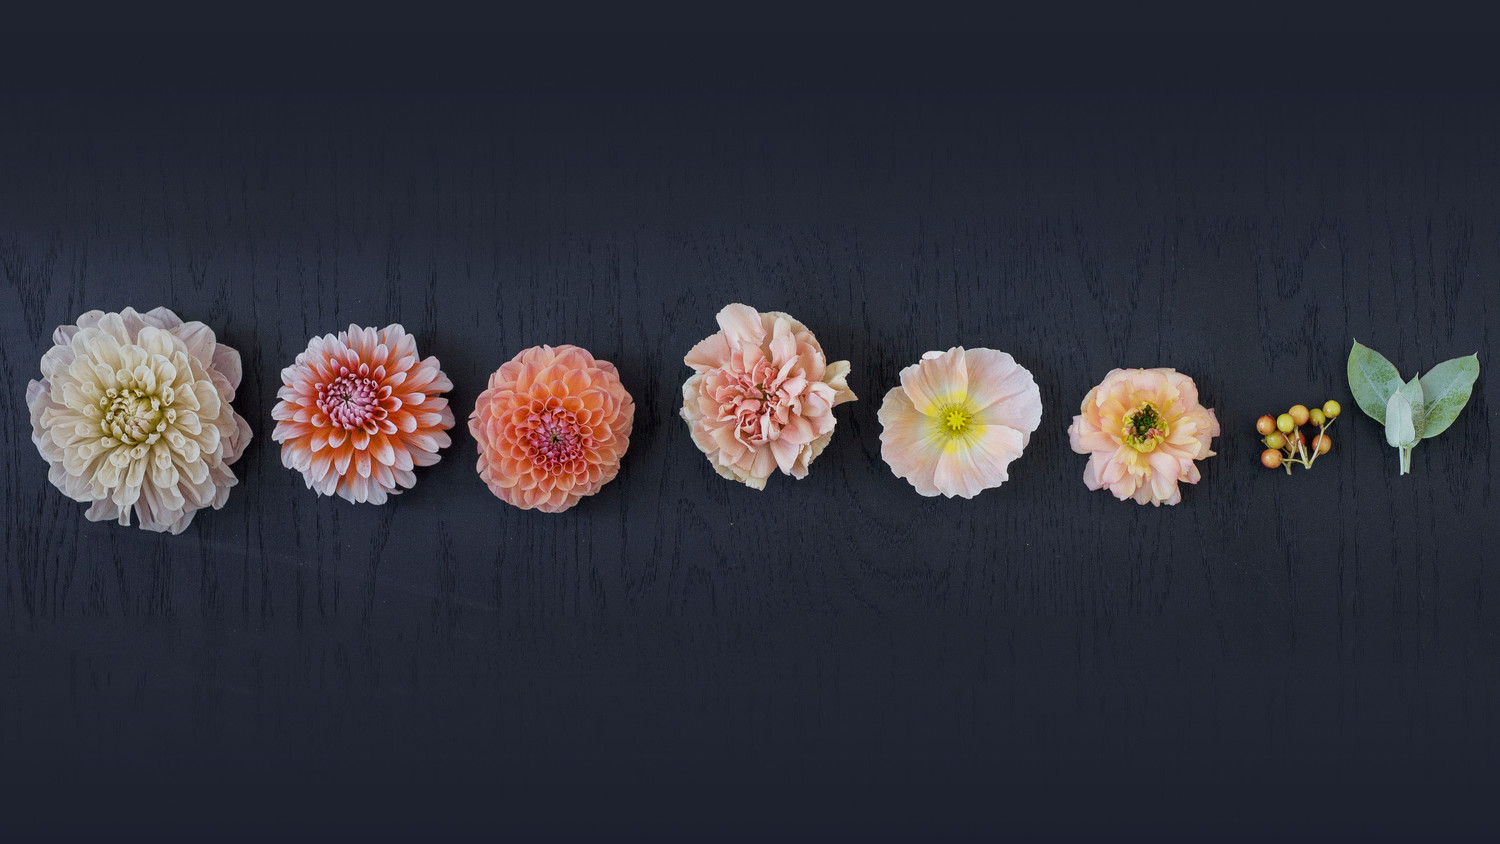 kiana underwood summer peach floral arrangement palette